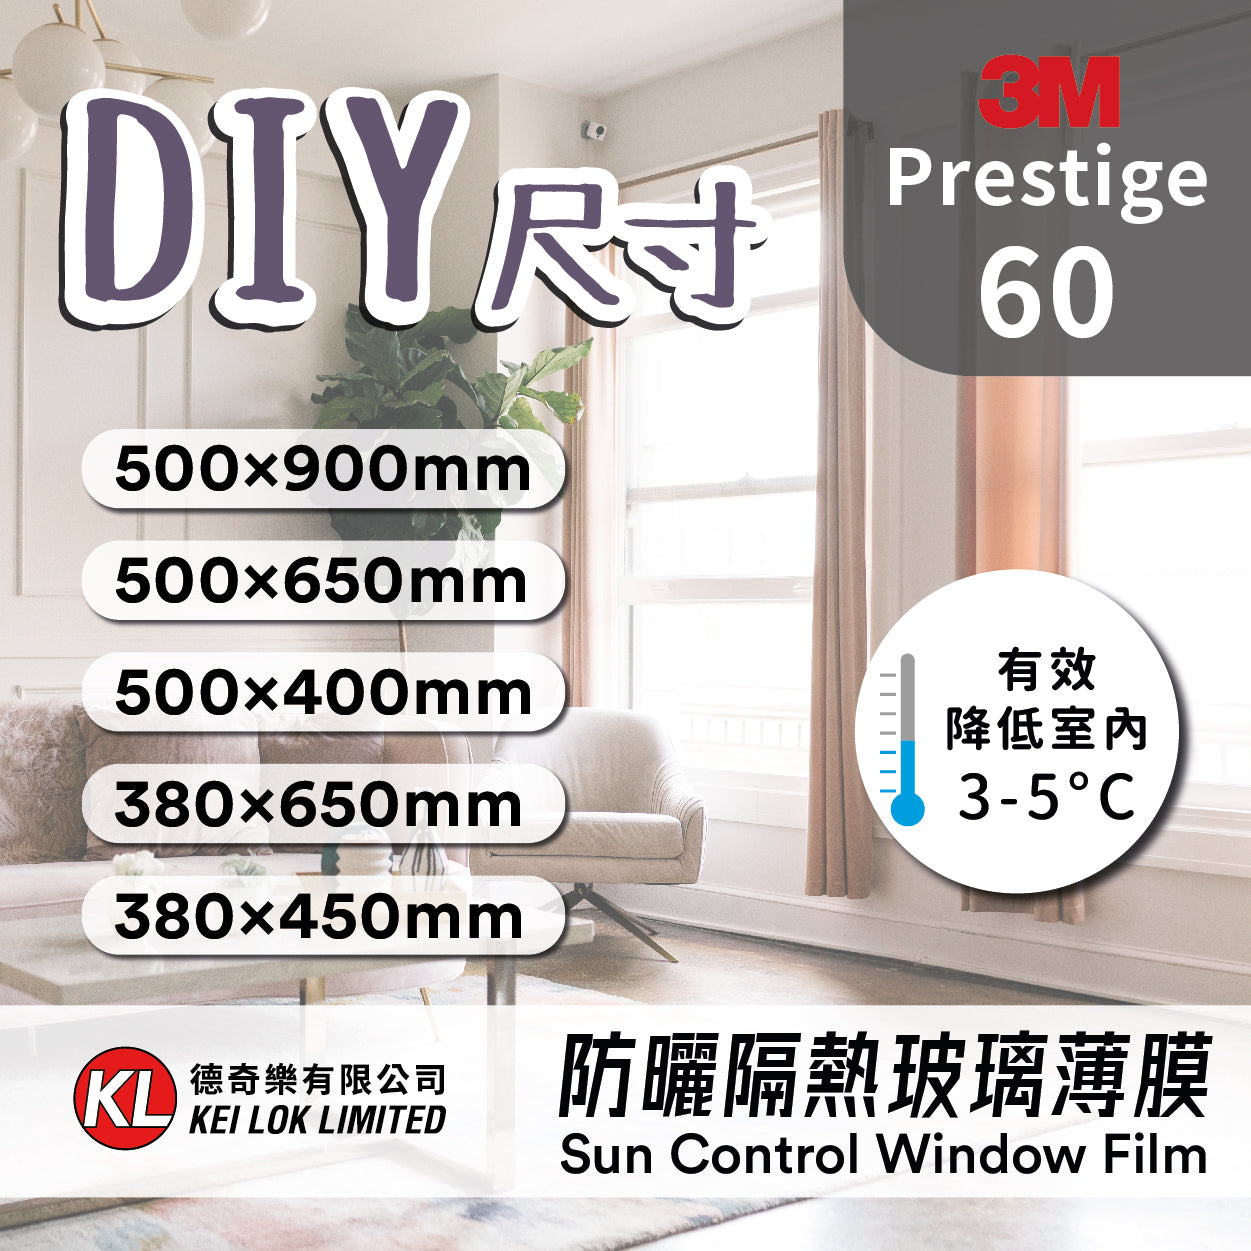 3M prestige sun control window film